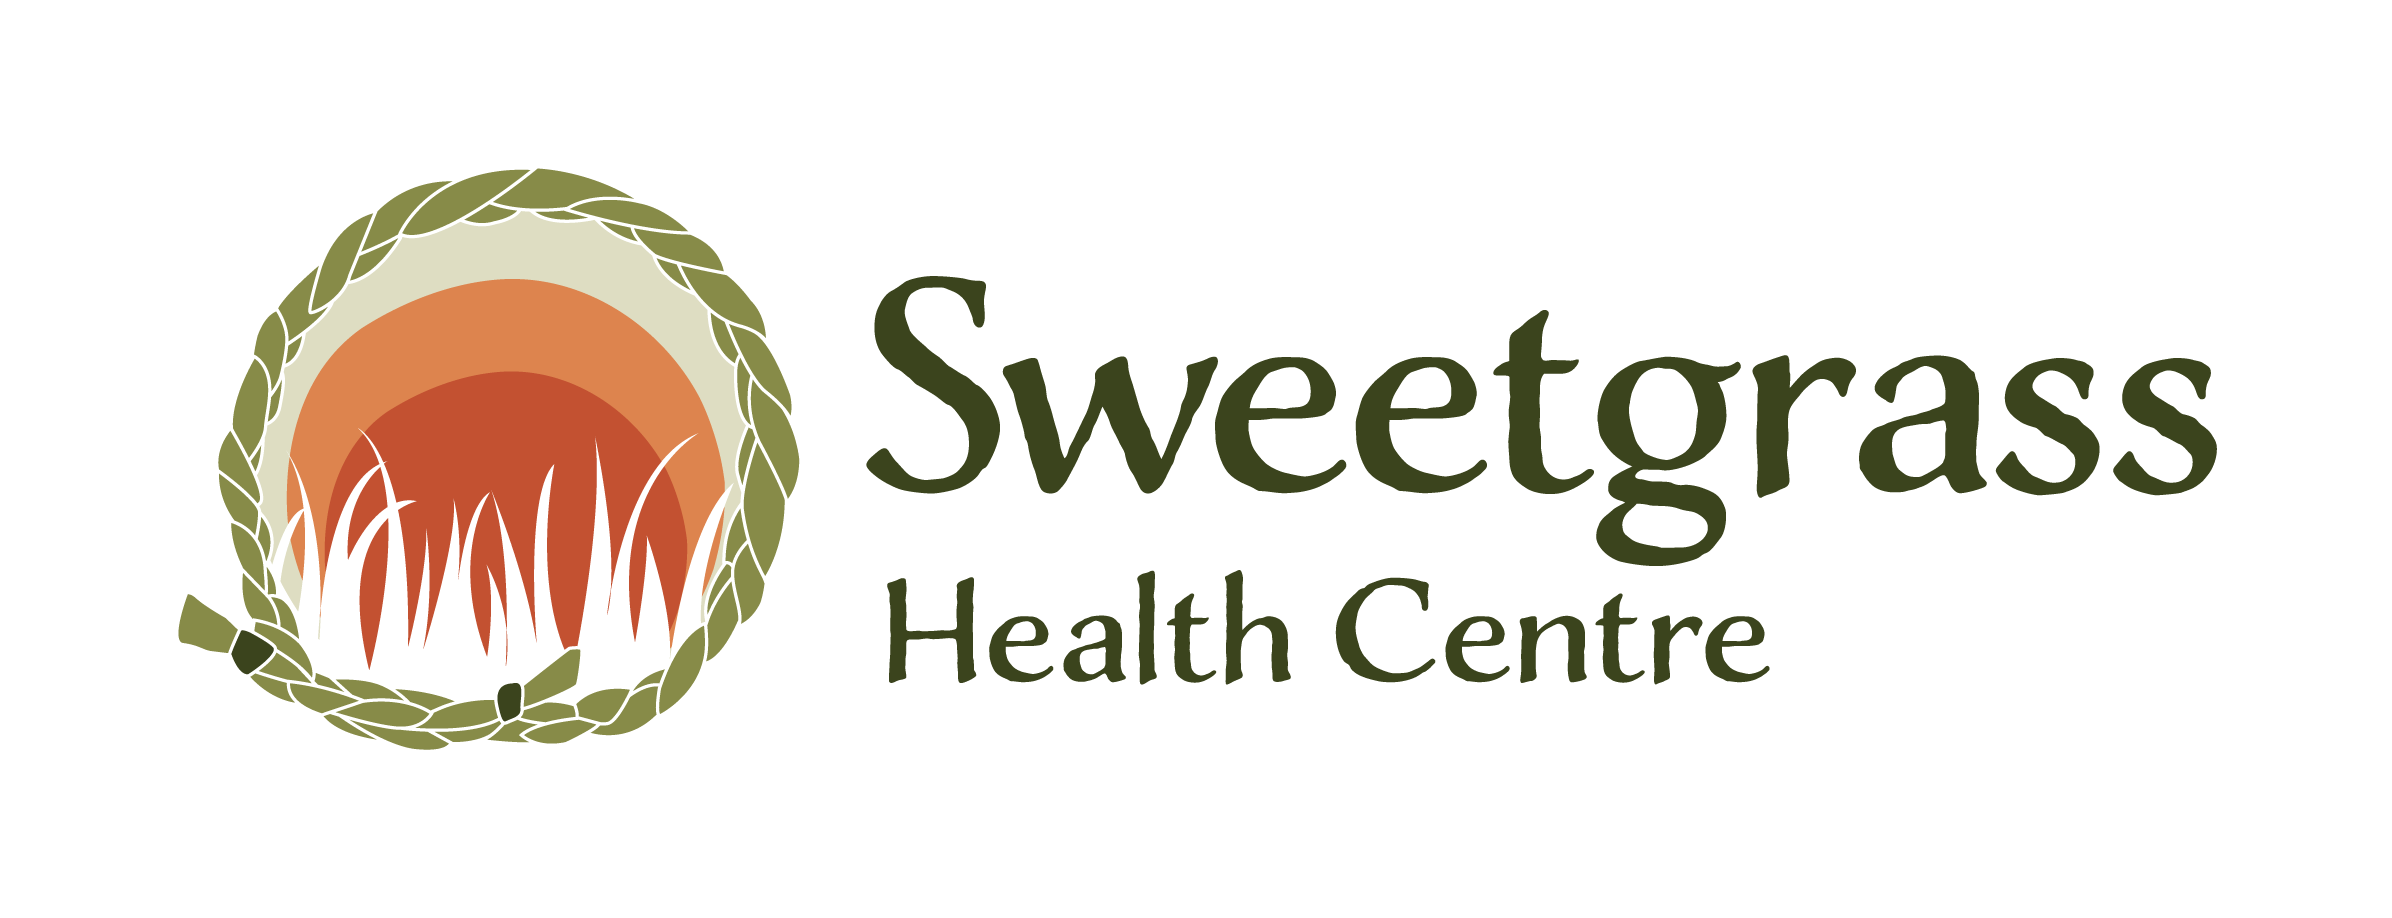 Sweetgrass Health Centre